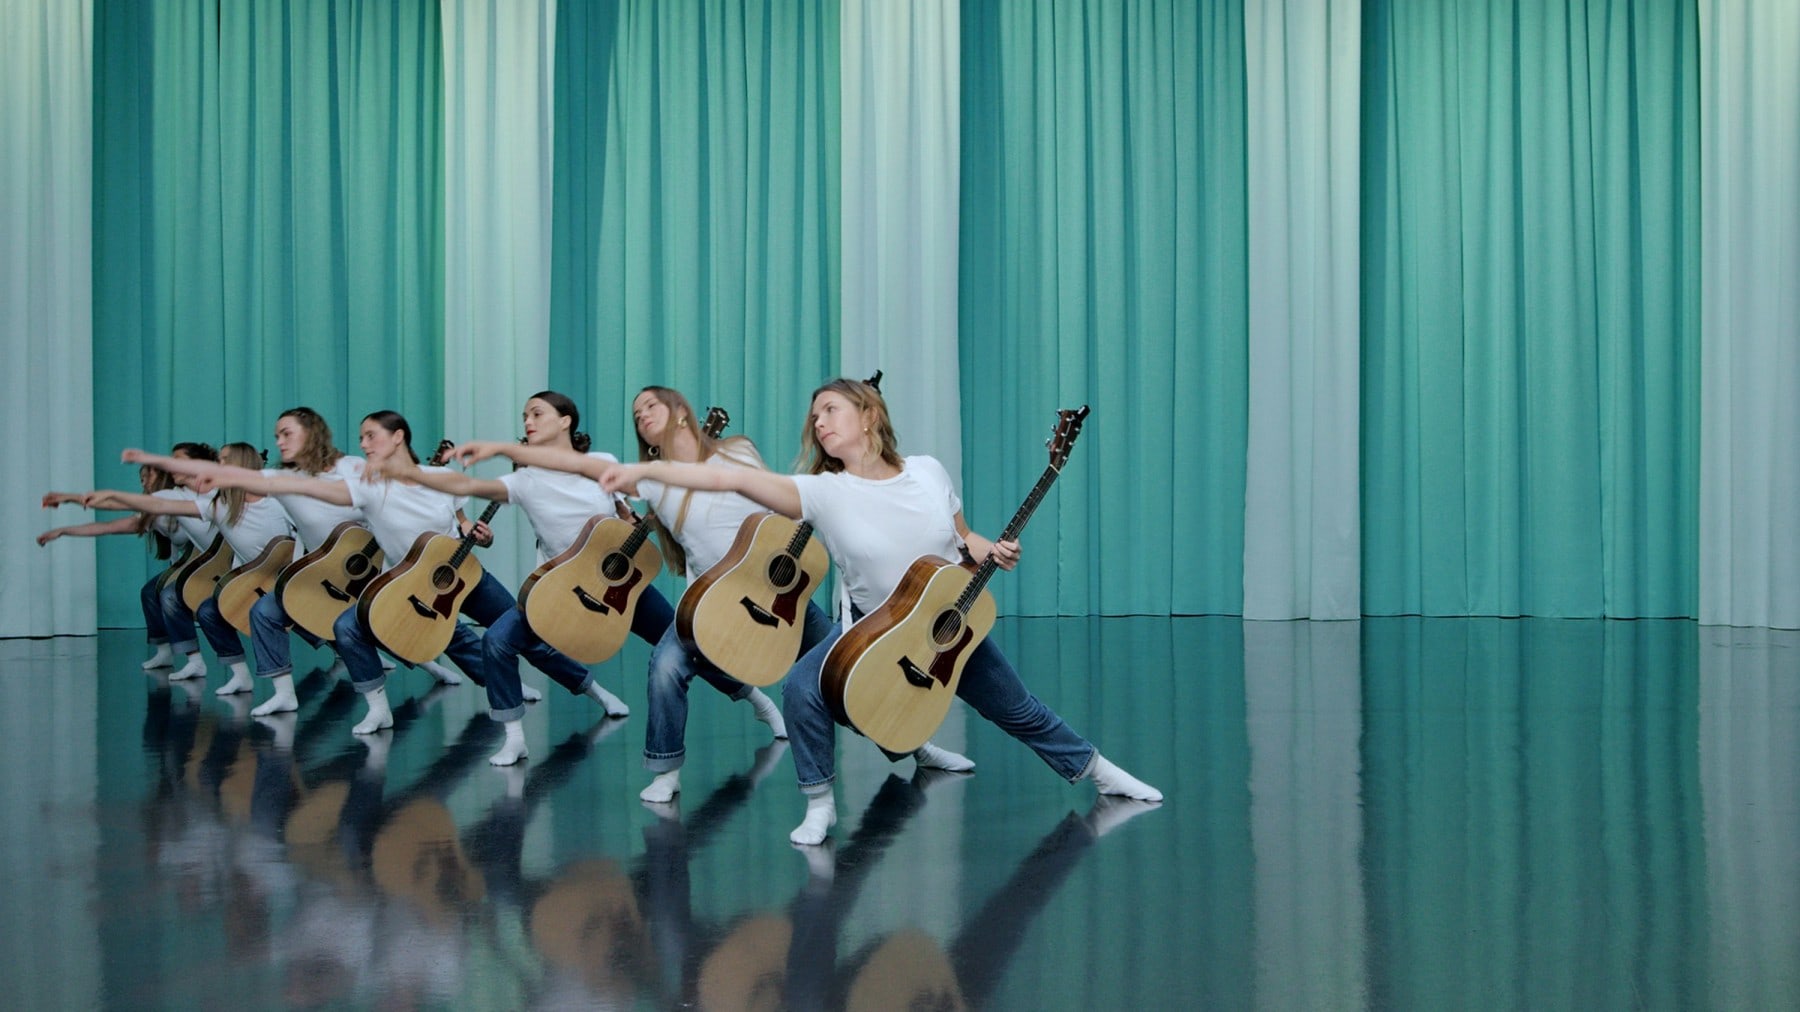 8 female dancers holding guitars